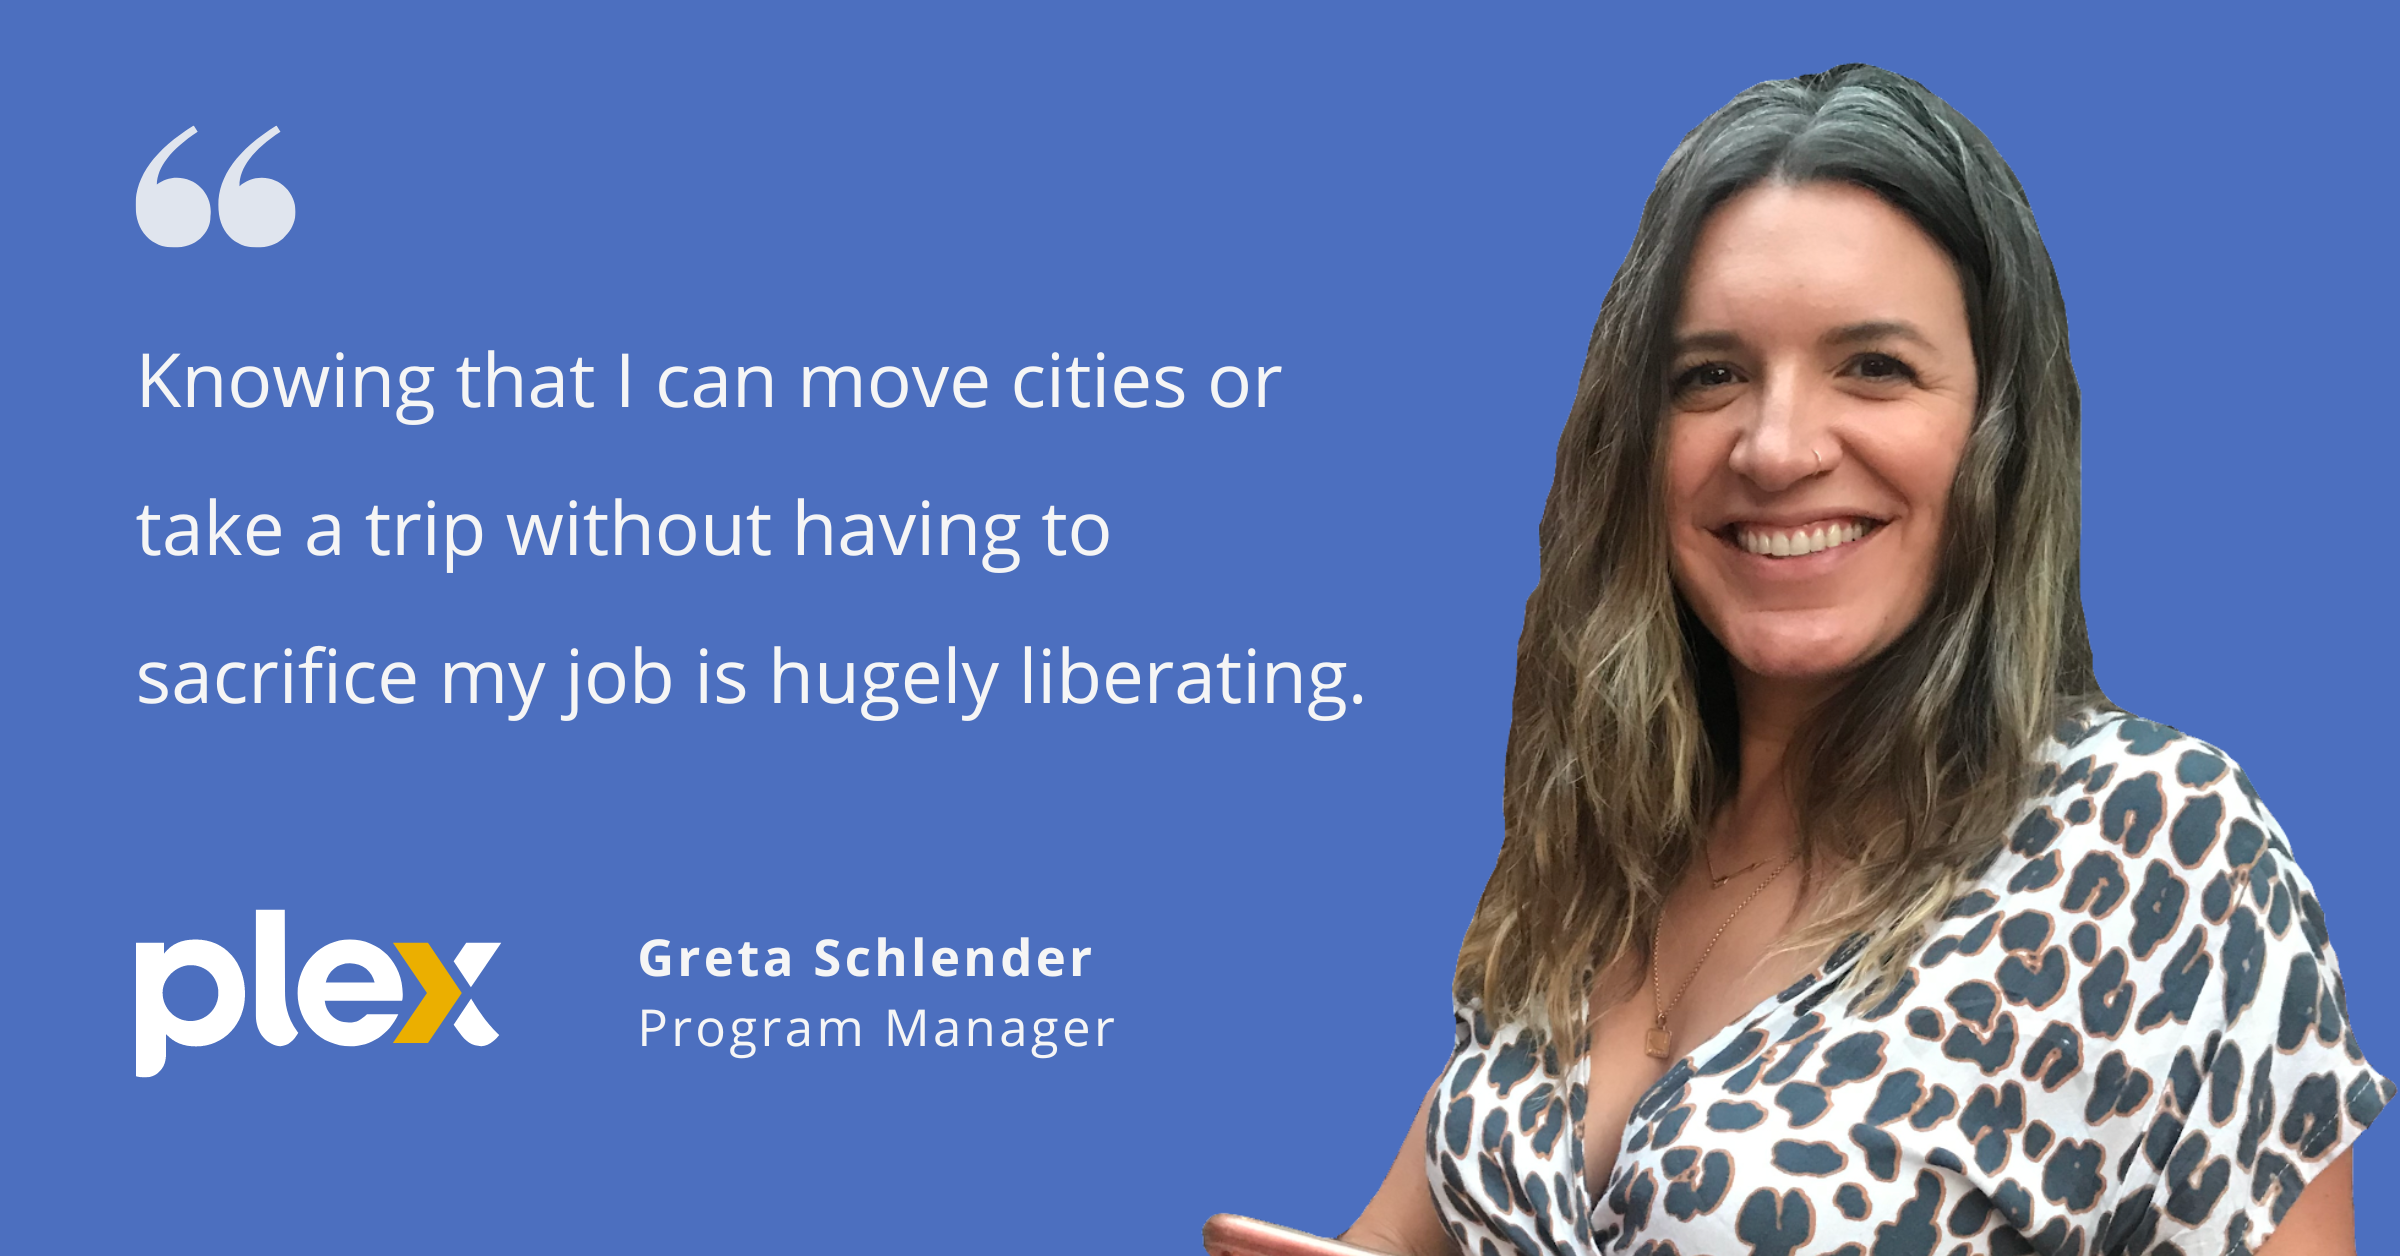 How Plex’s Greta Schlender built her career while traveling the world